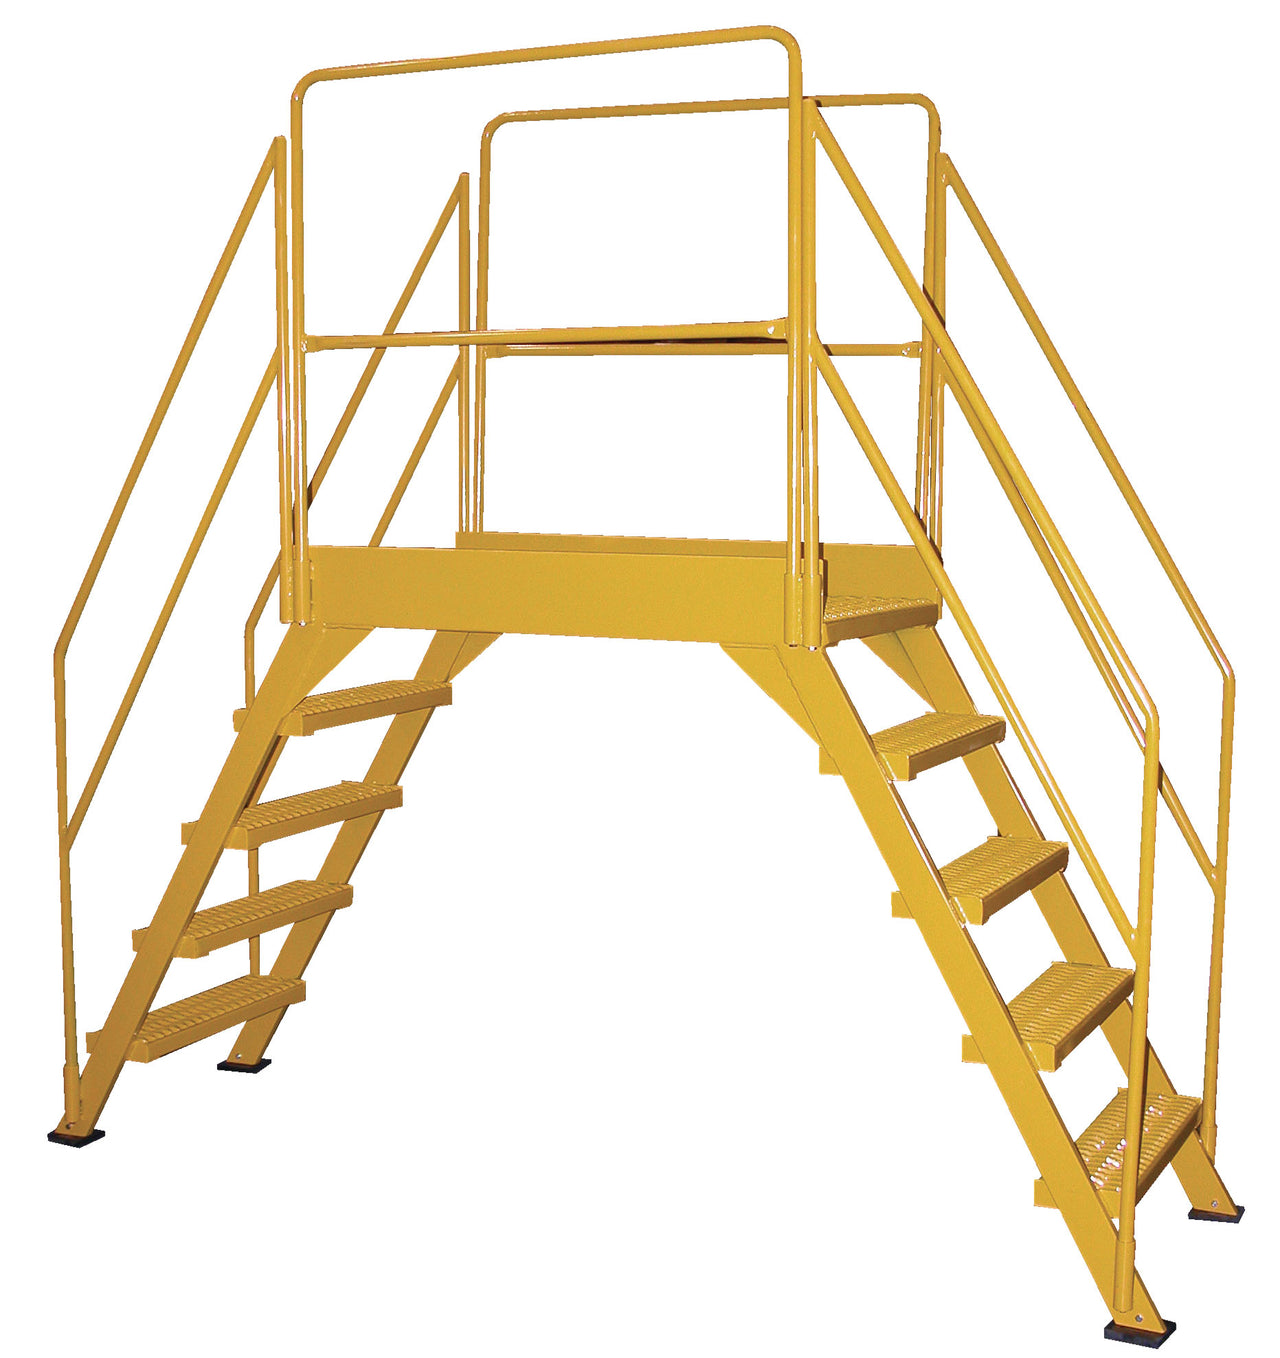 6 Step Cross-Over Ladder w/ 24" Deck